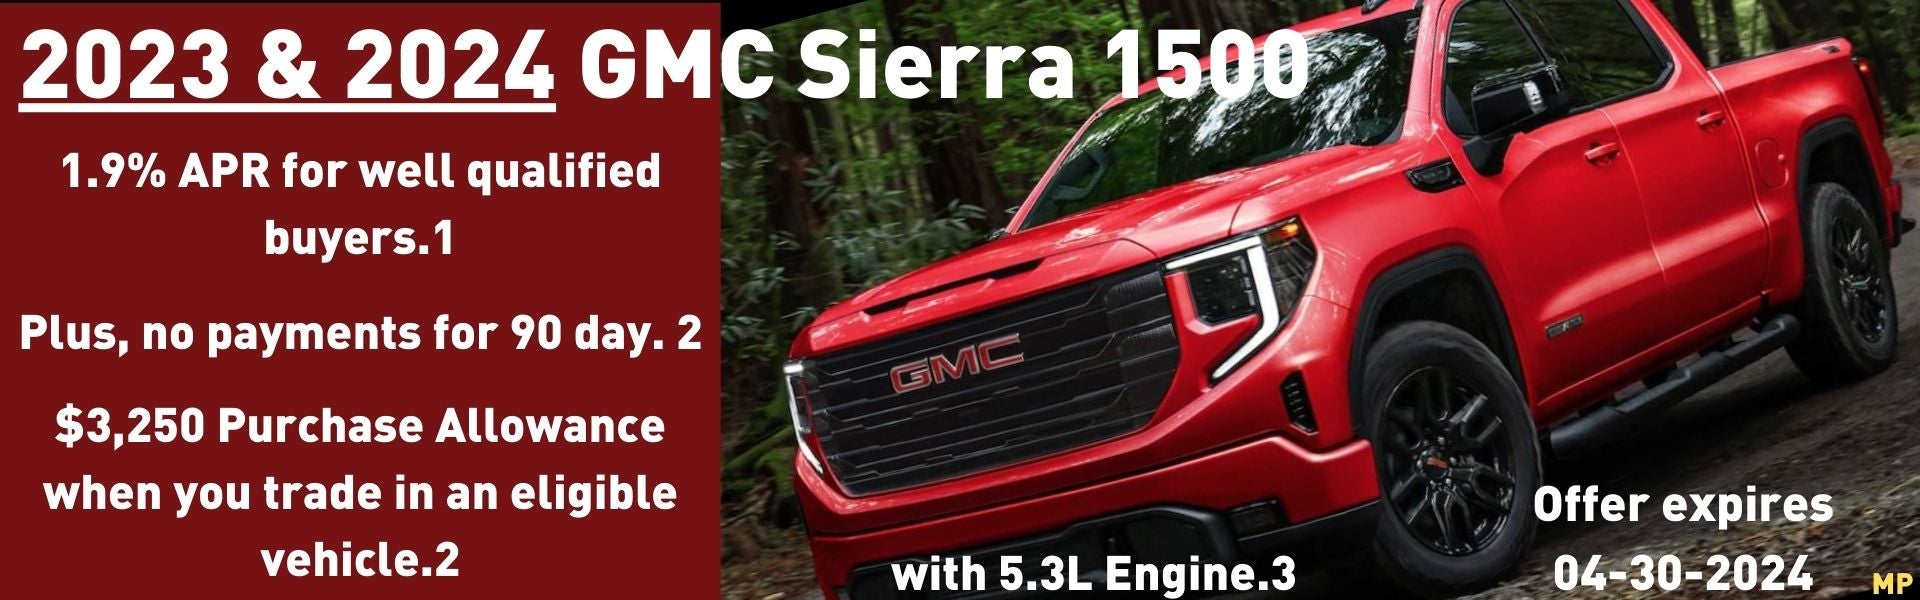 2023 GMC Sierra 1500 offer